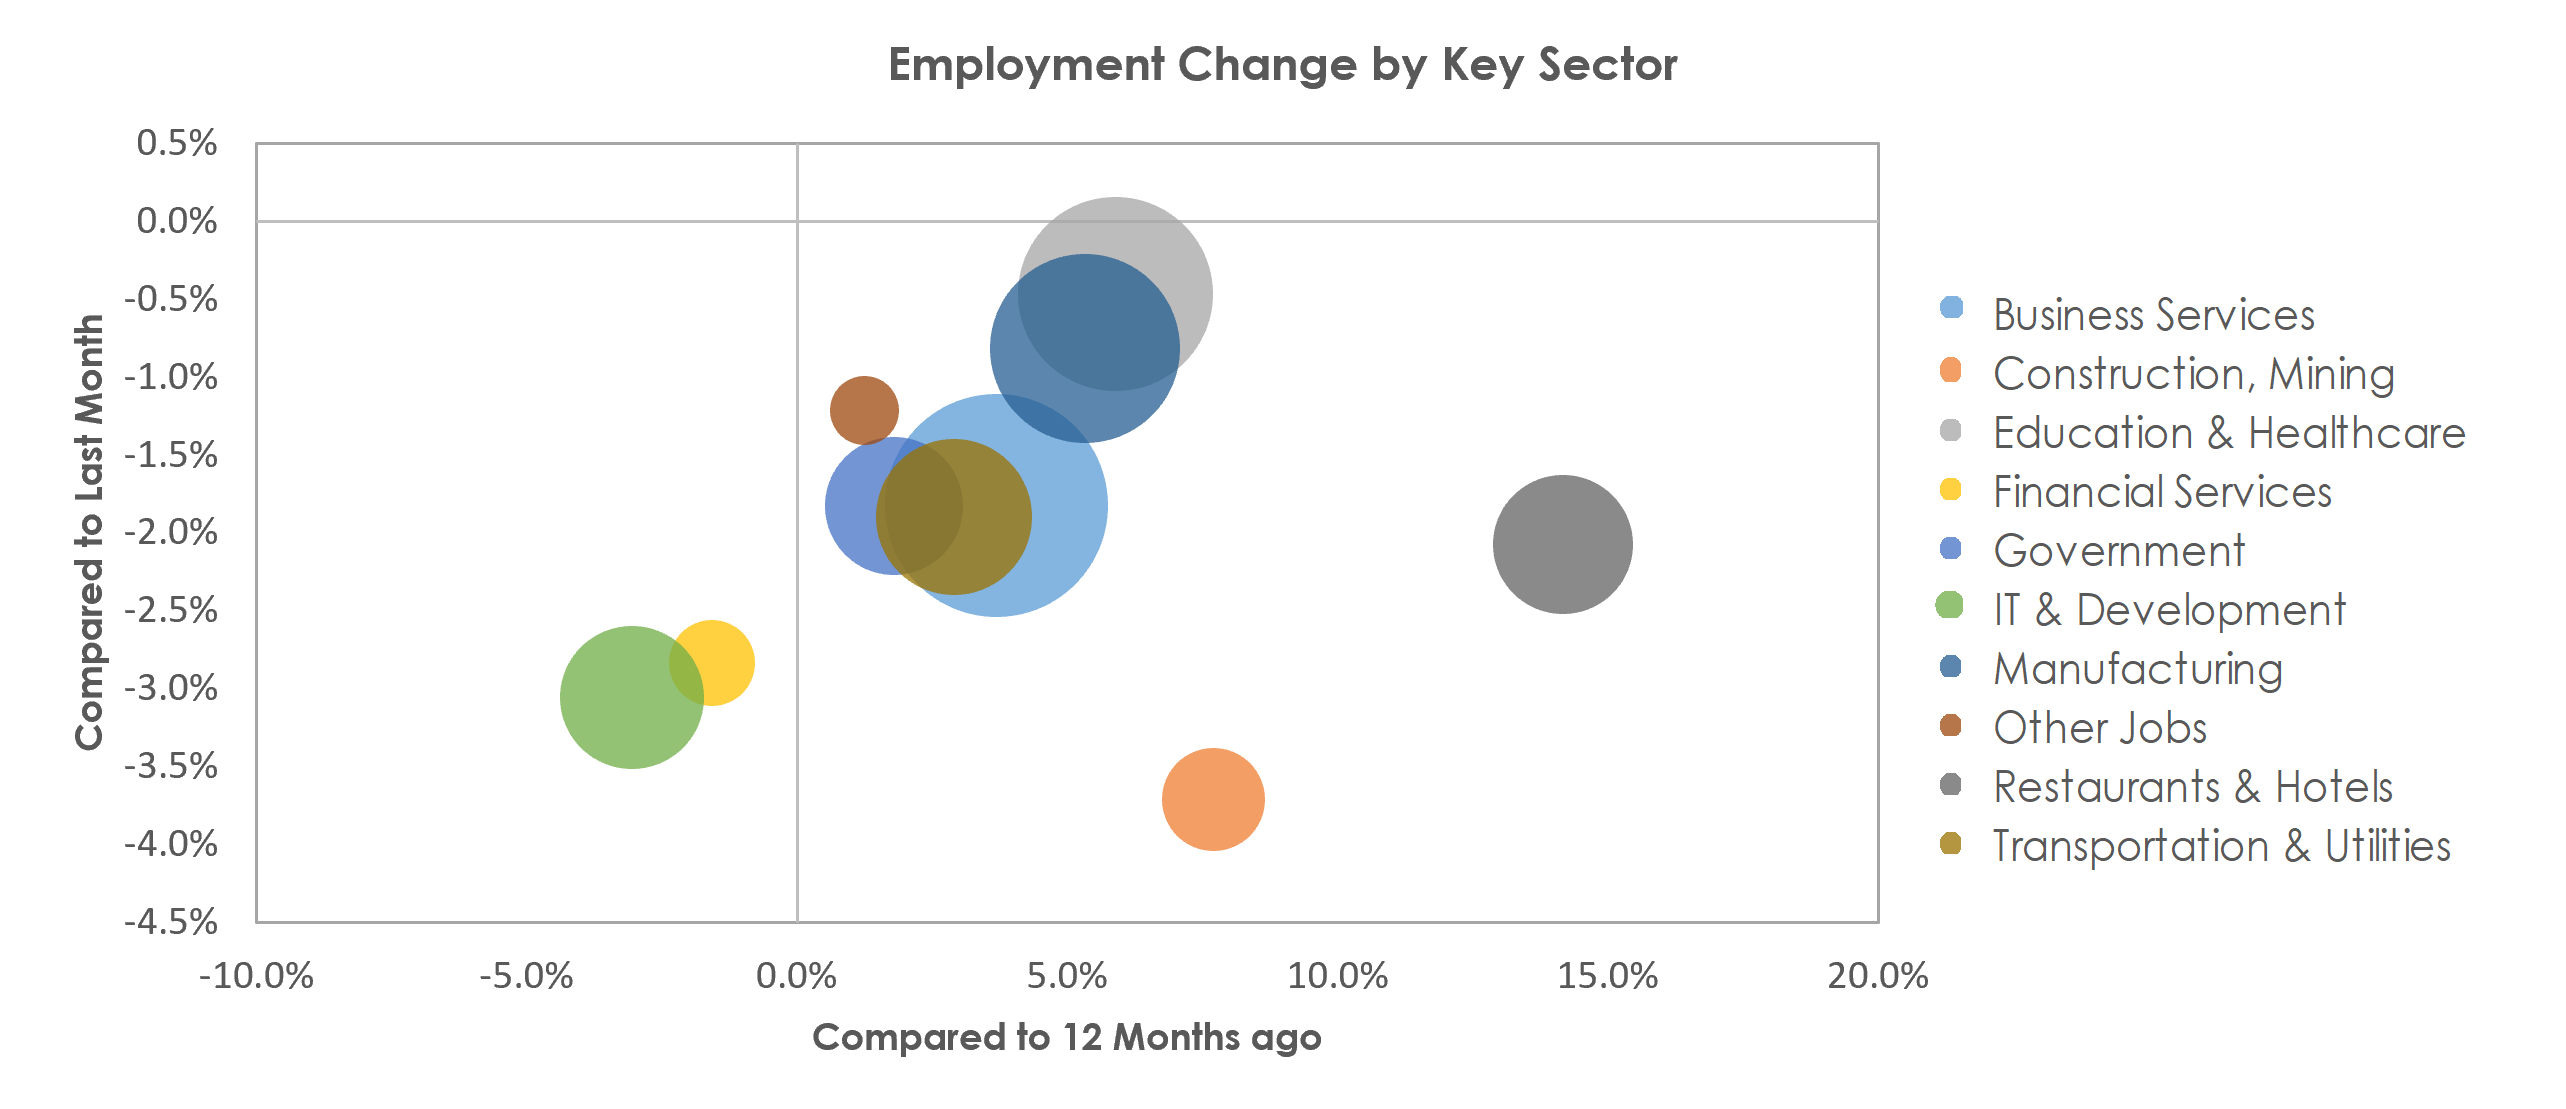 San Jose-Sunnyvale-Santa Clara, CA Unemployment by Industry January 2023